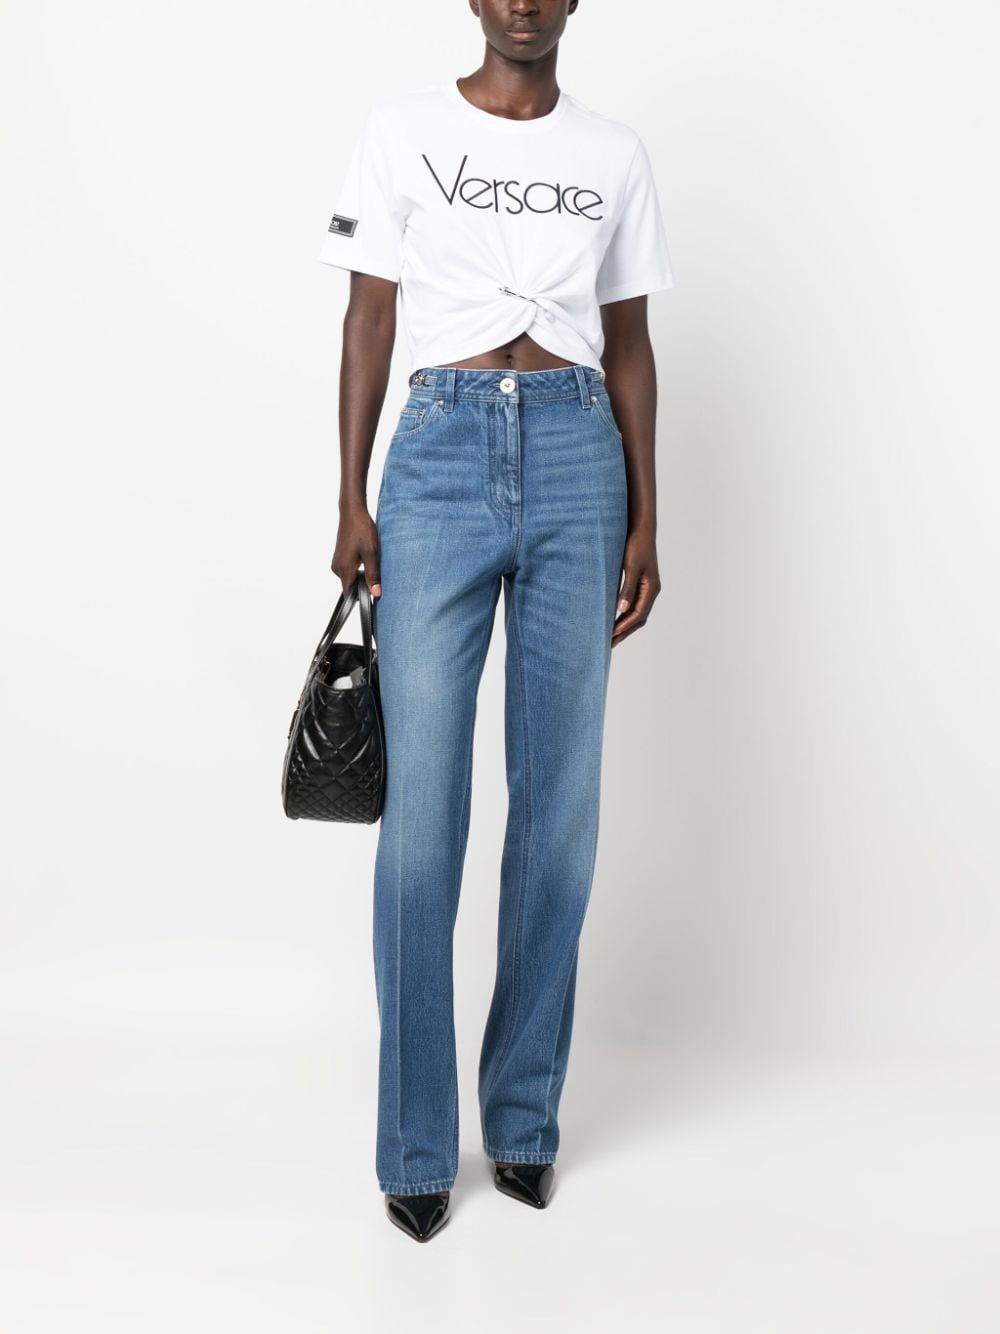 Versace セーフティピン クロップドTシャツ - Farfetch